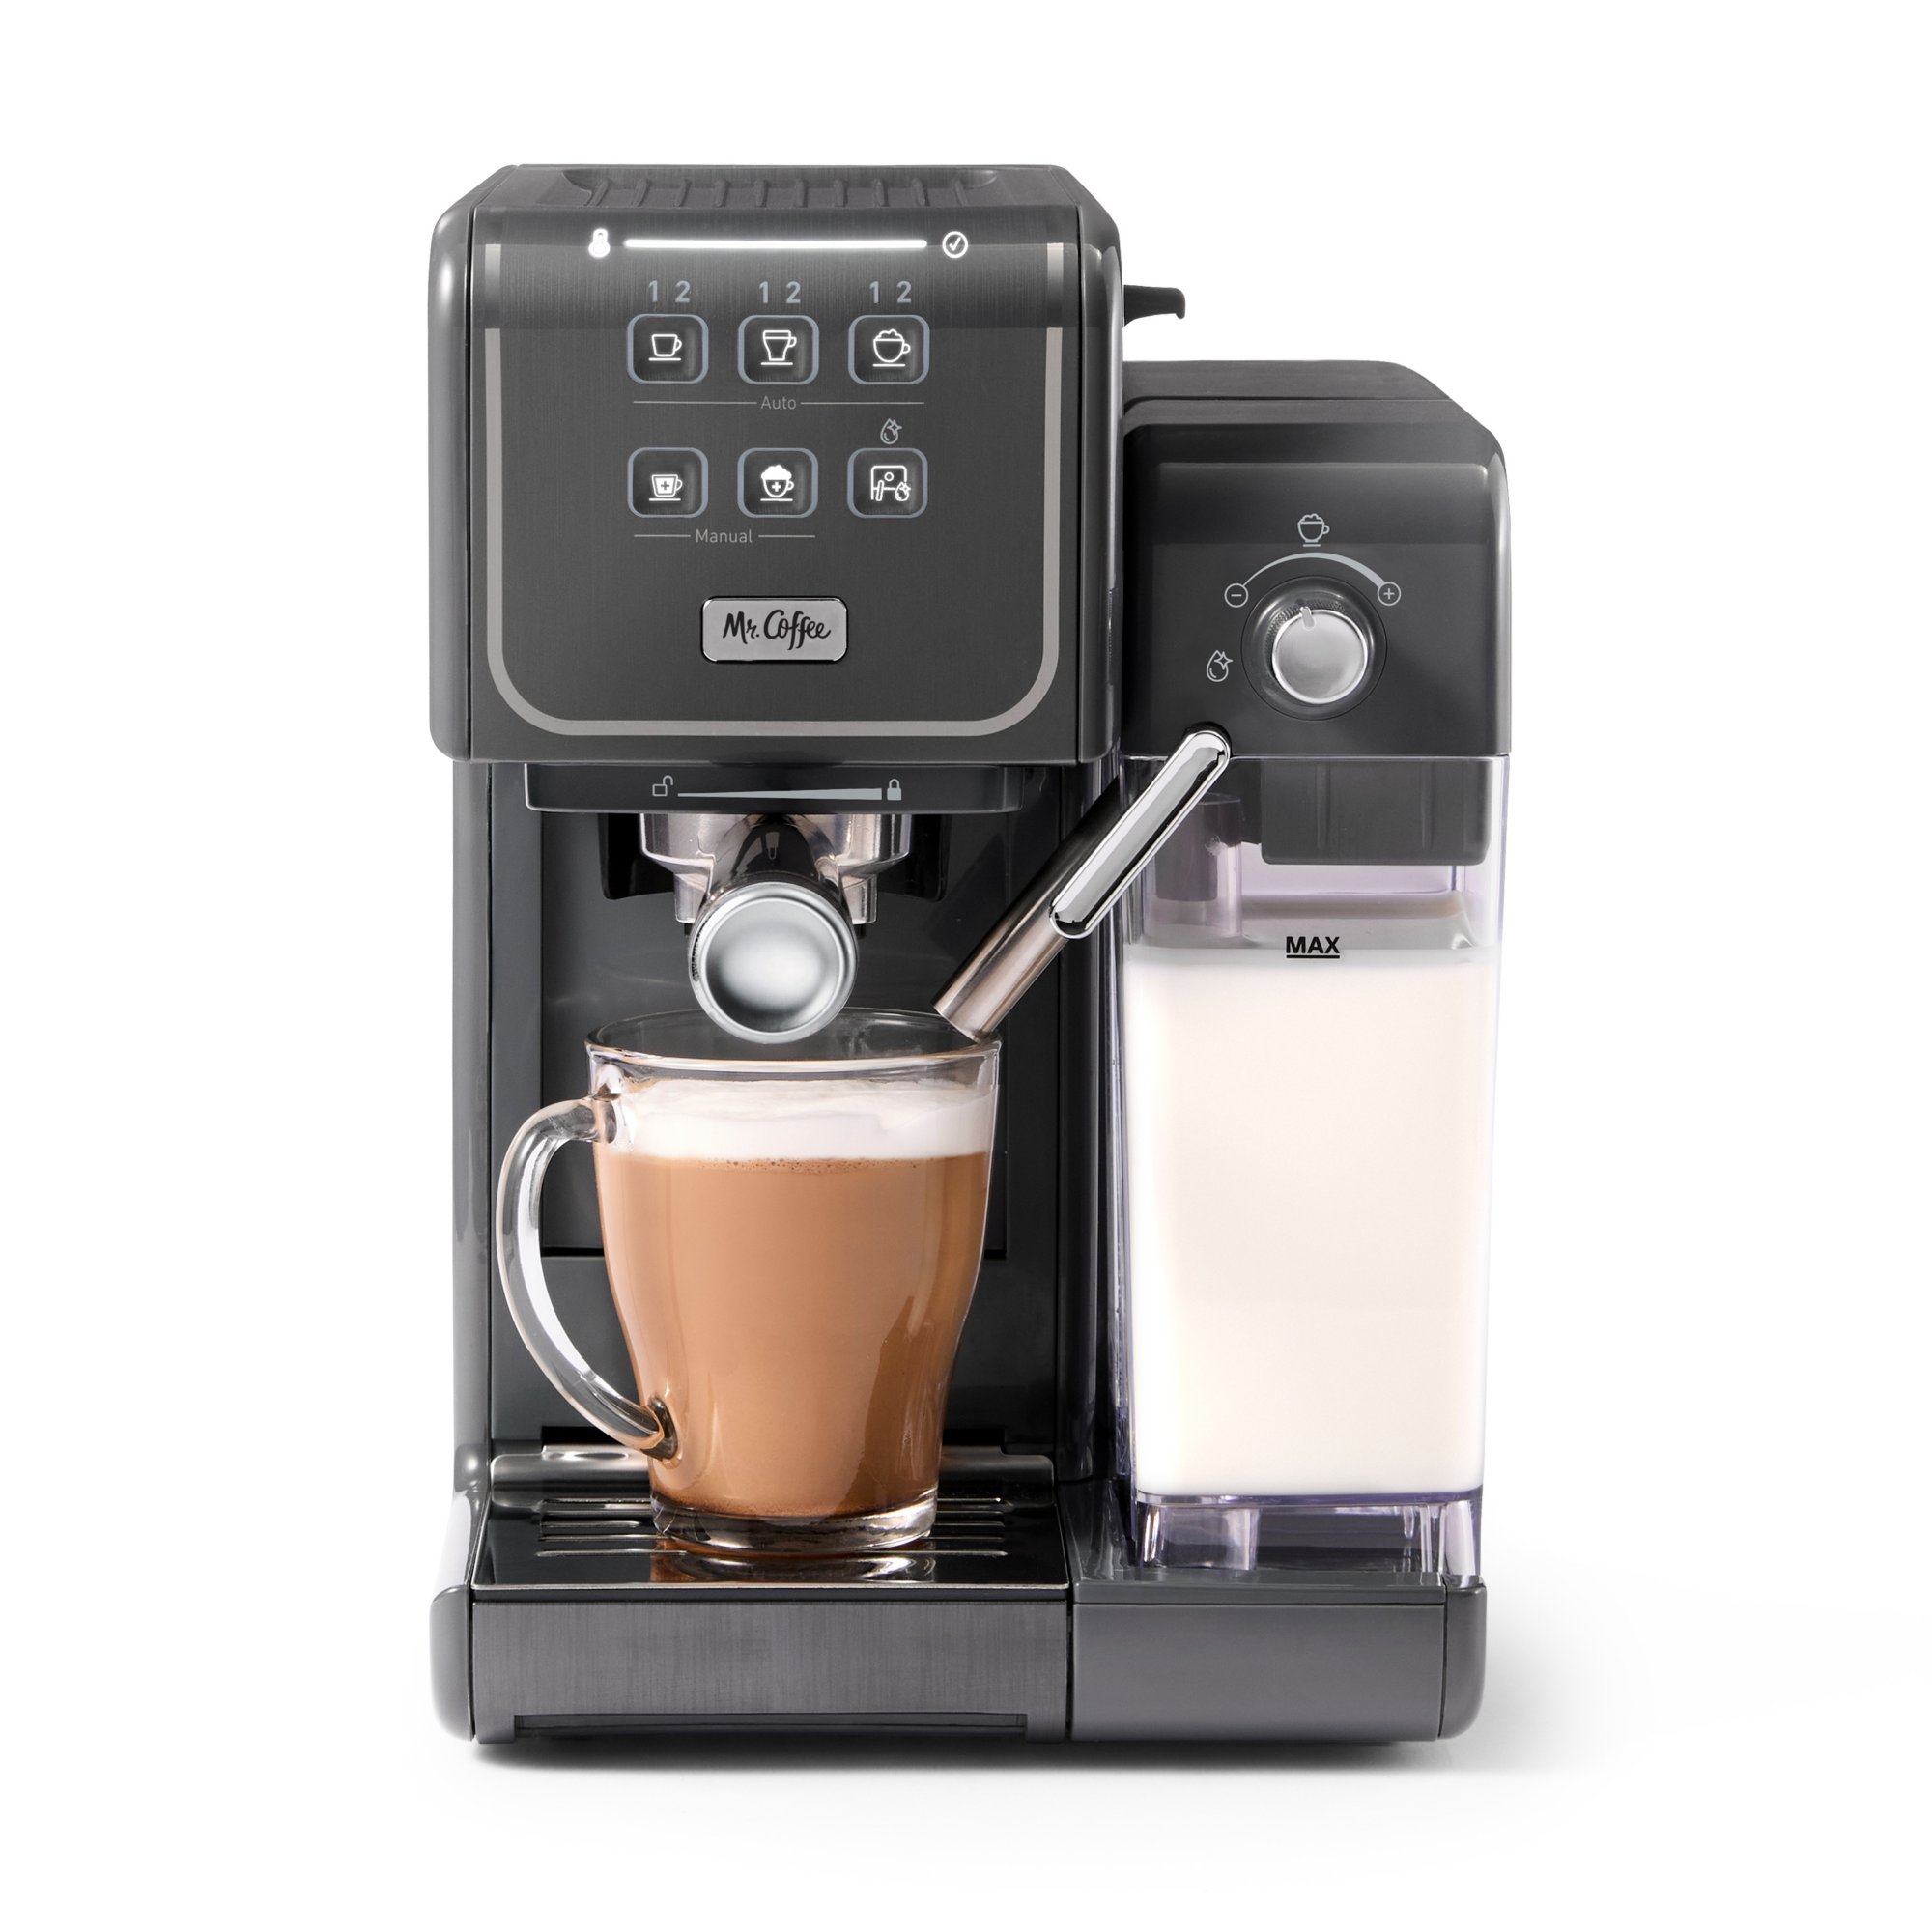 Mr. Coffee 4-in-1 Latte Iced + Hot Coffee Maker